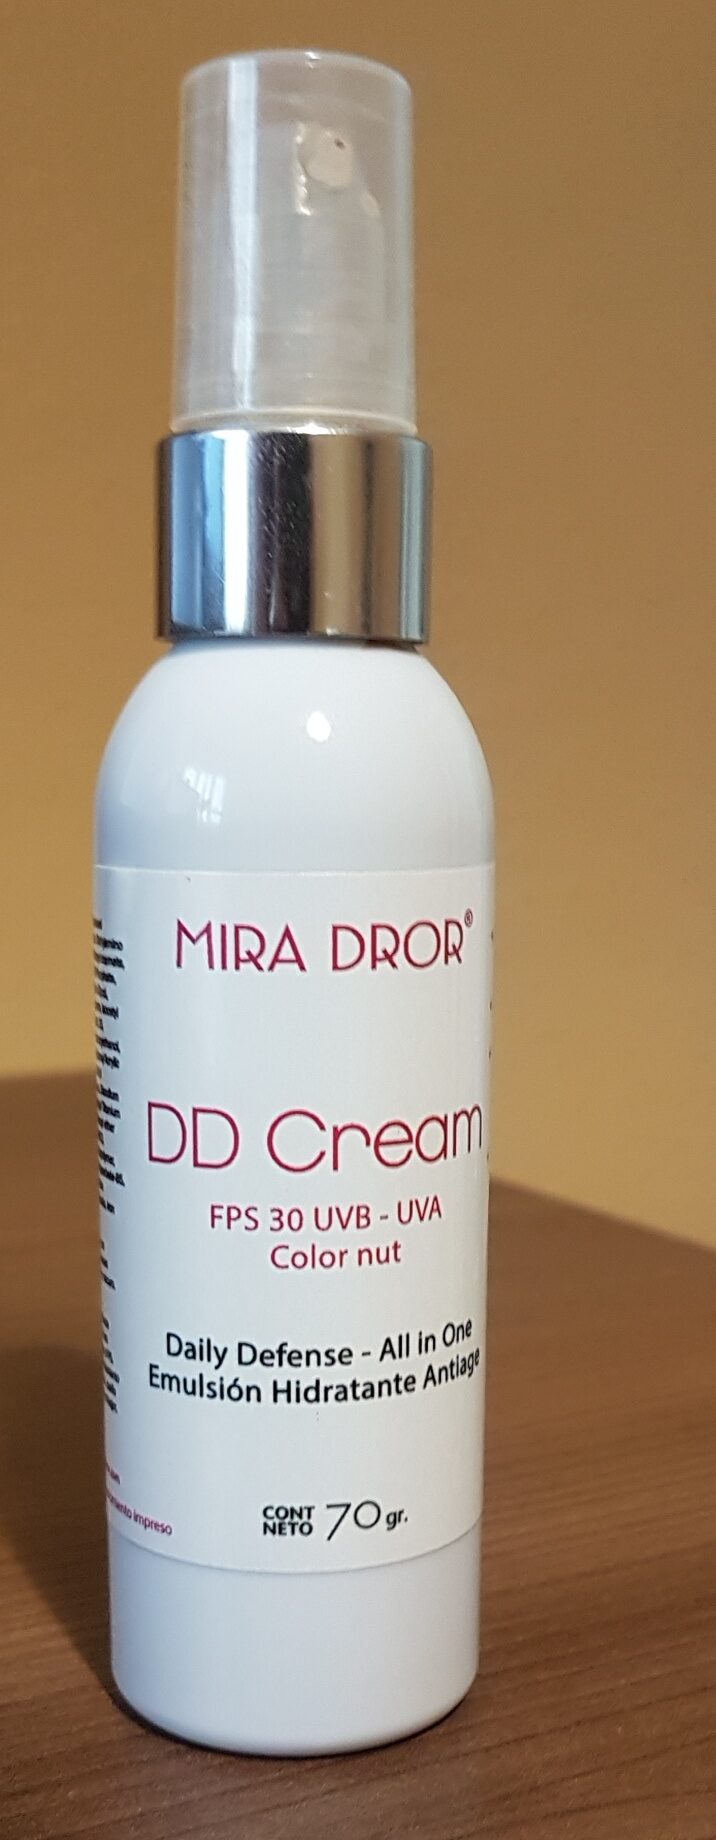 DD Cream and sunscreen - Tuote - en